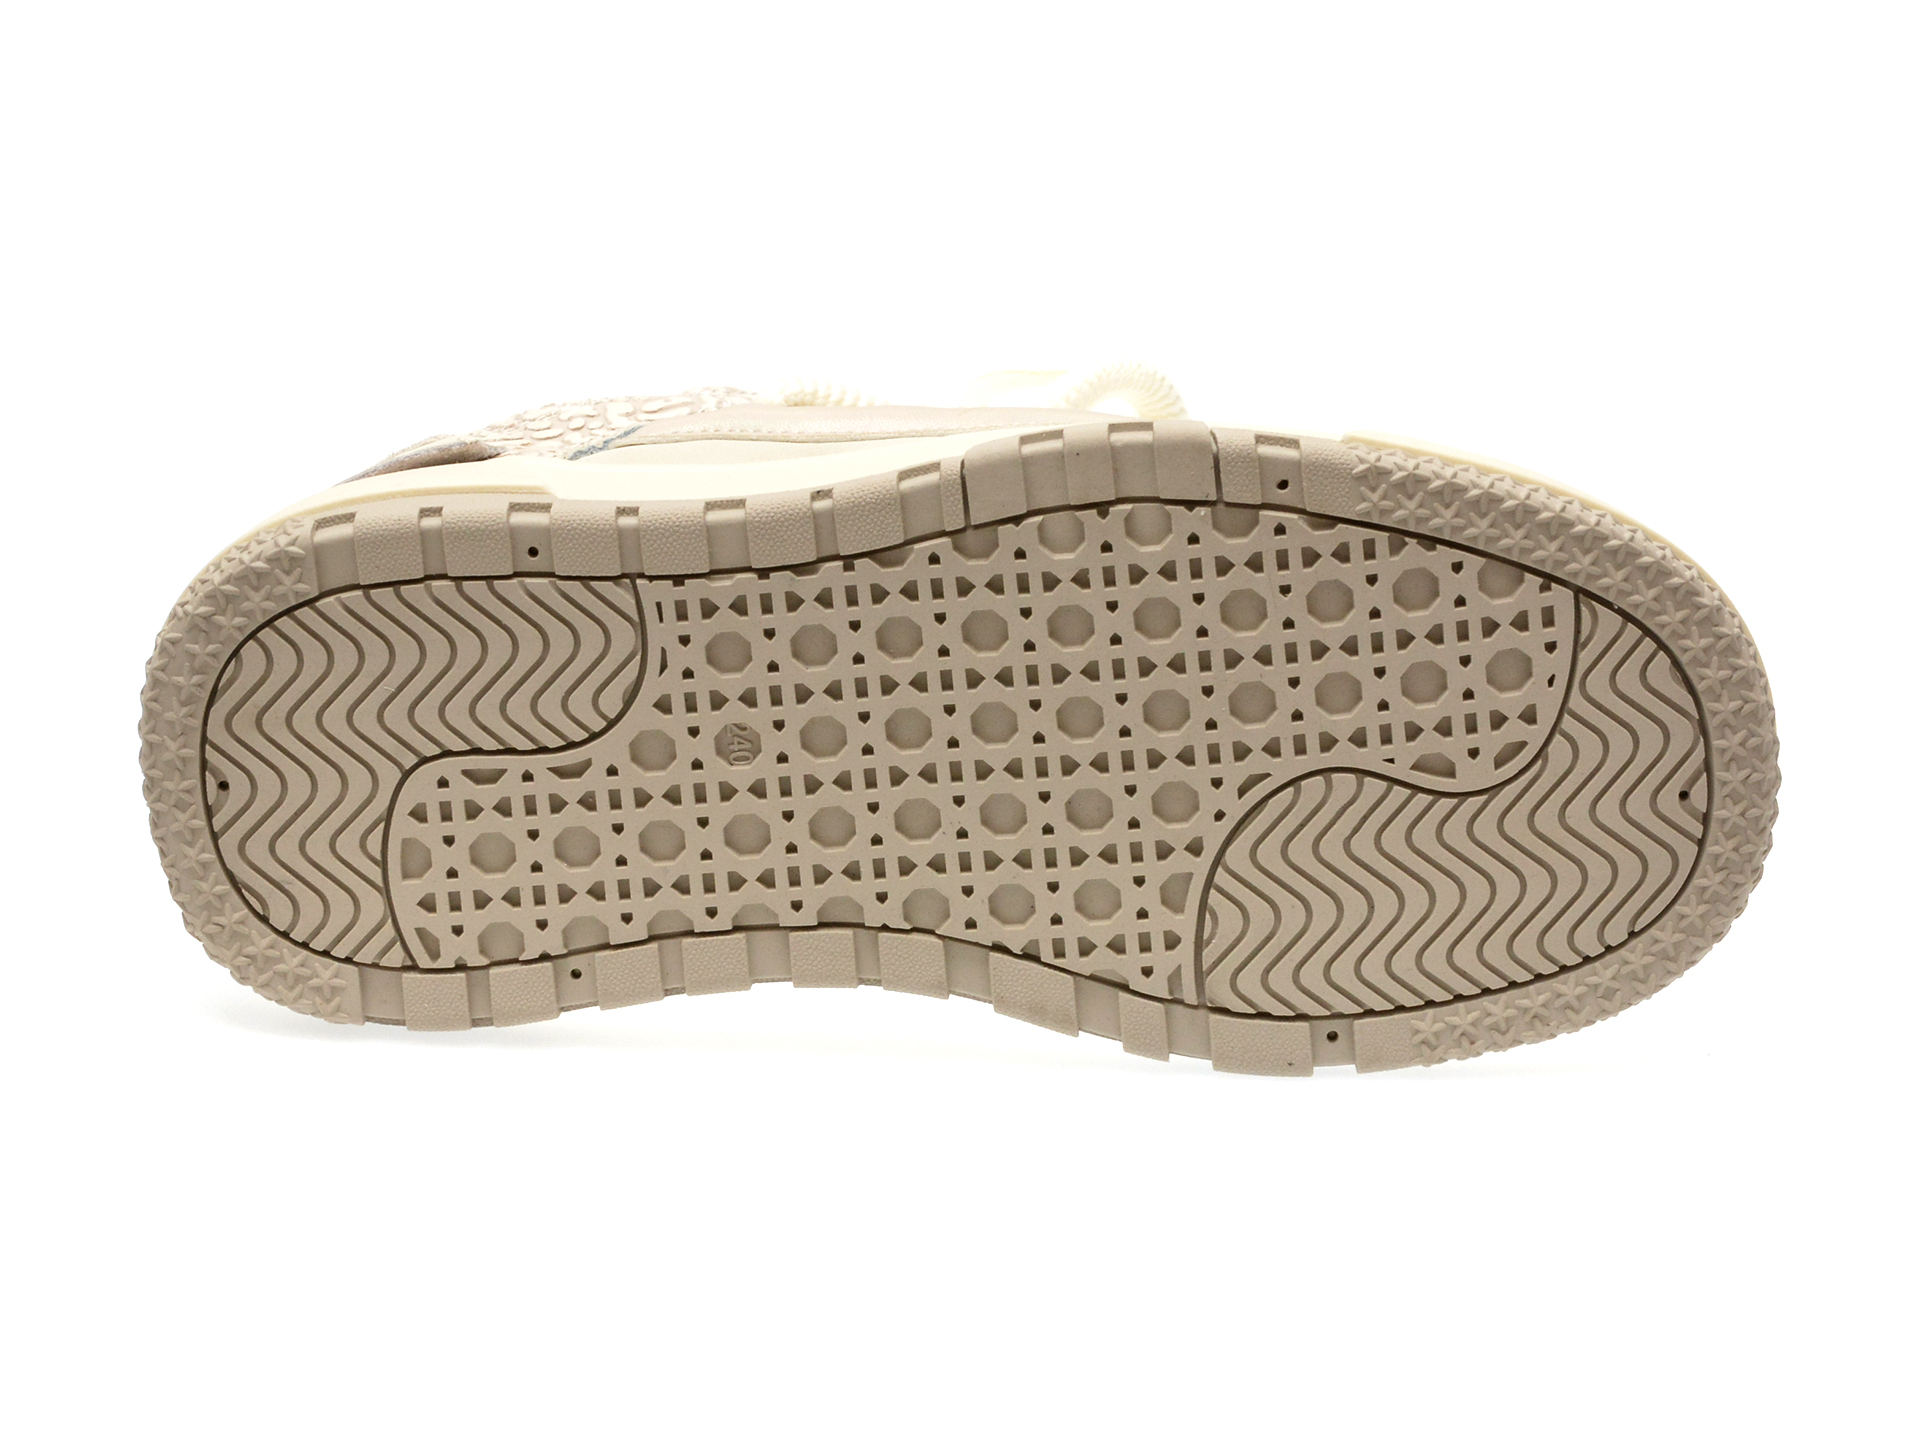 Pantofi casual GRYXX albi, 3551, din piele naturala